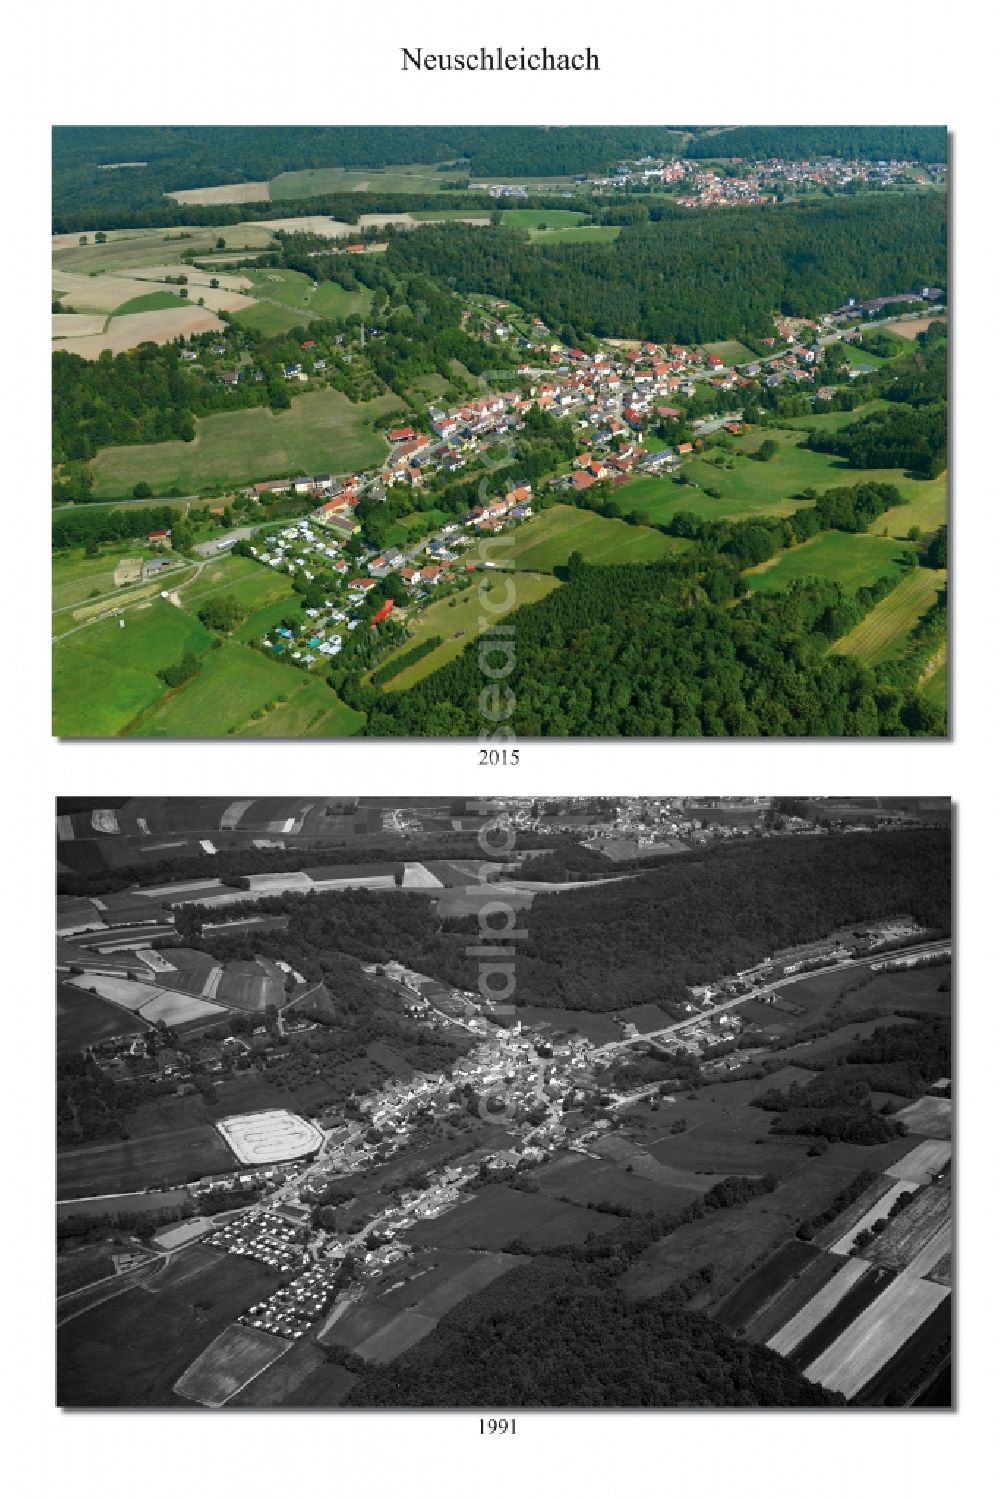 Aerial photograph Neuschleichach - 1991 and 2015 village - view change of Neuschleichach in the state Bavaria